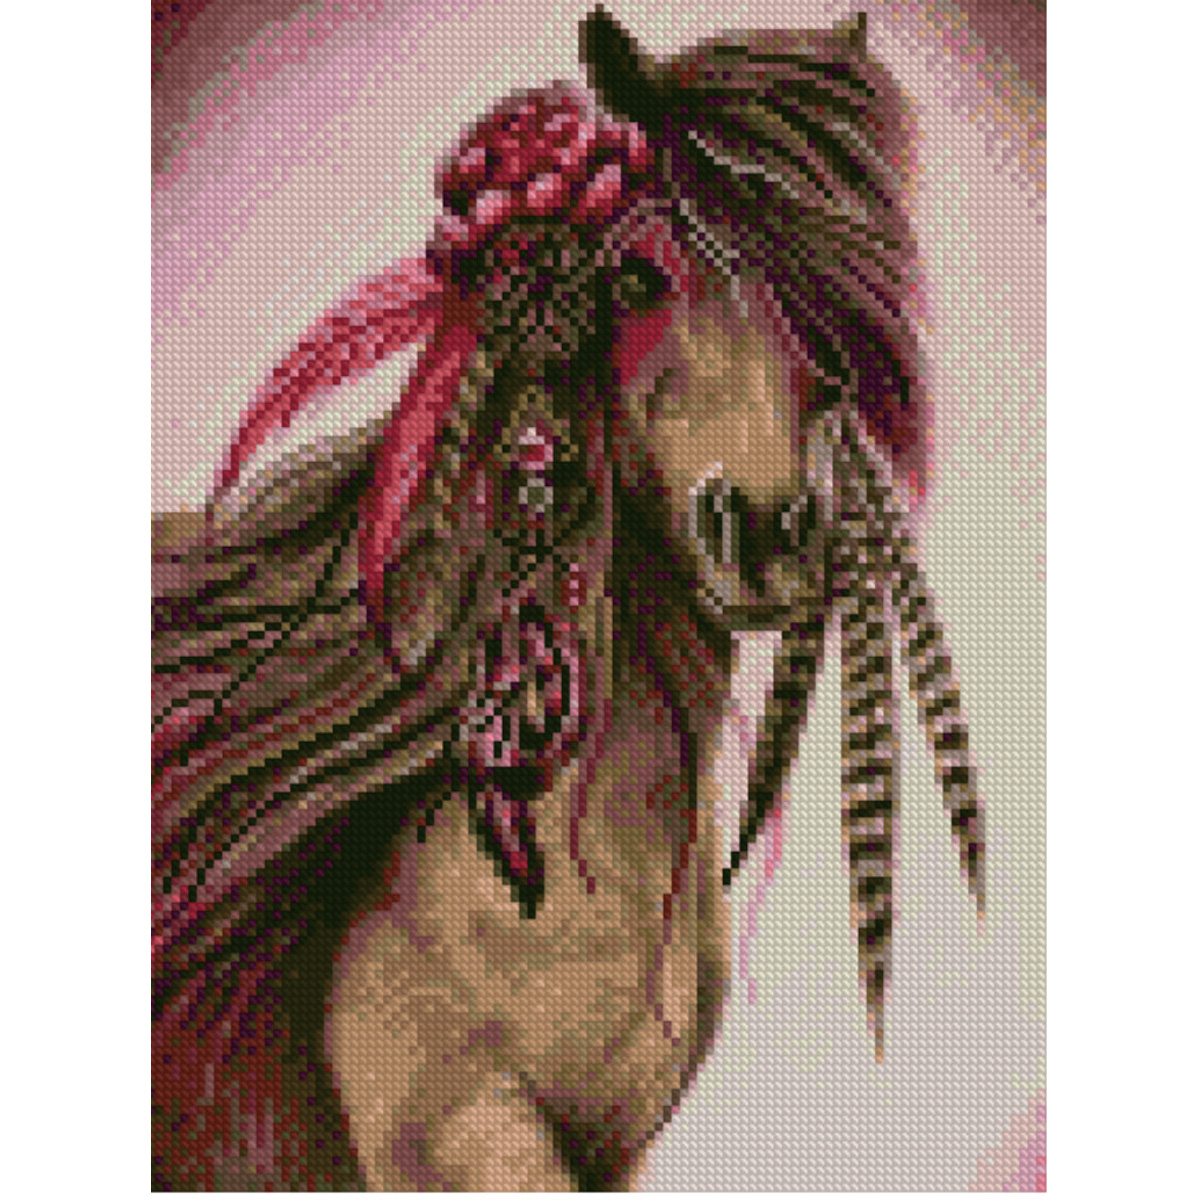 Diamond mosaic Premium HX213 "Fairytale horse", size 30x40 cm